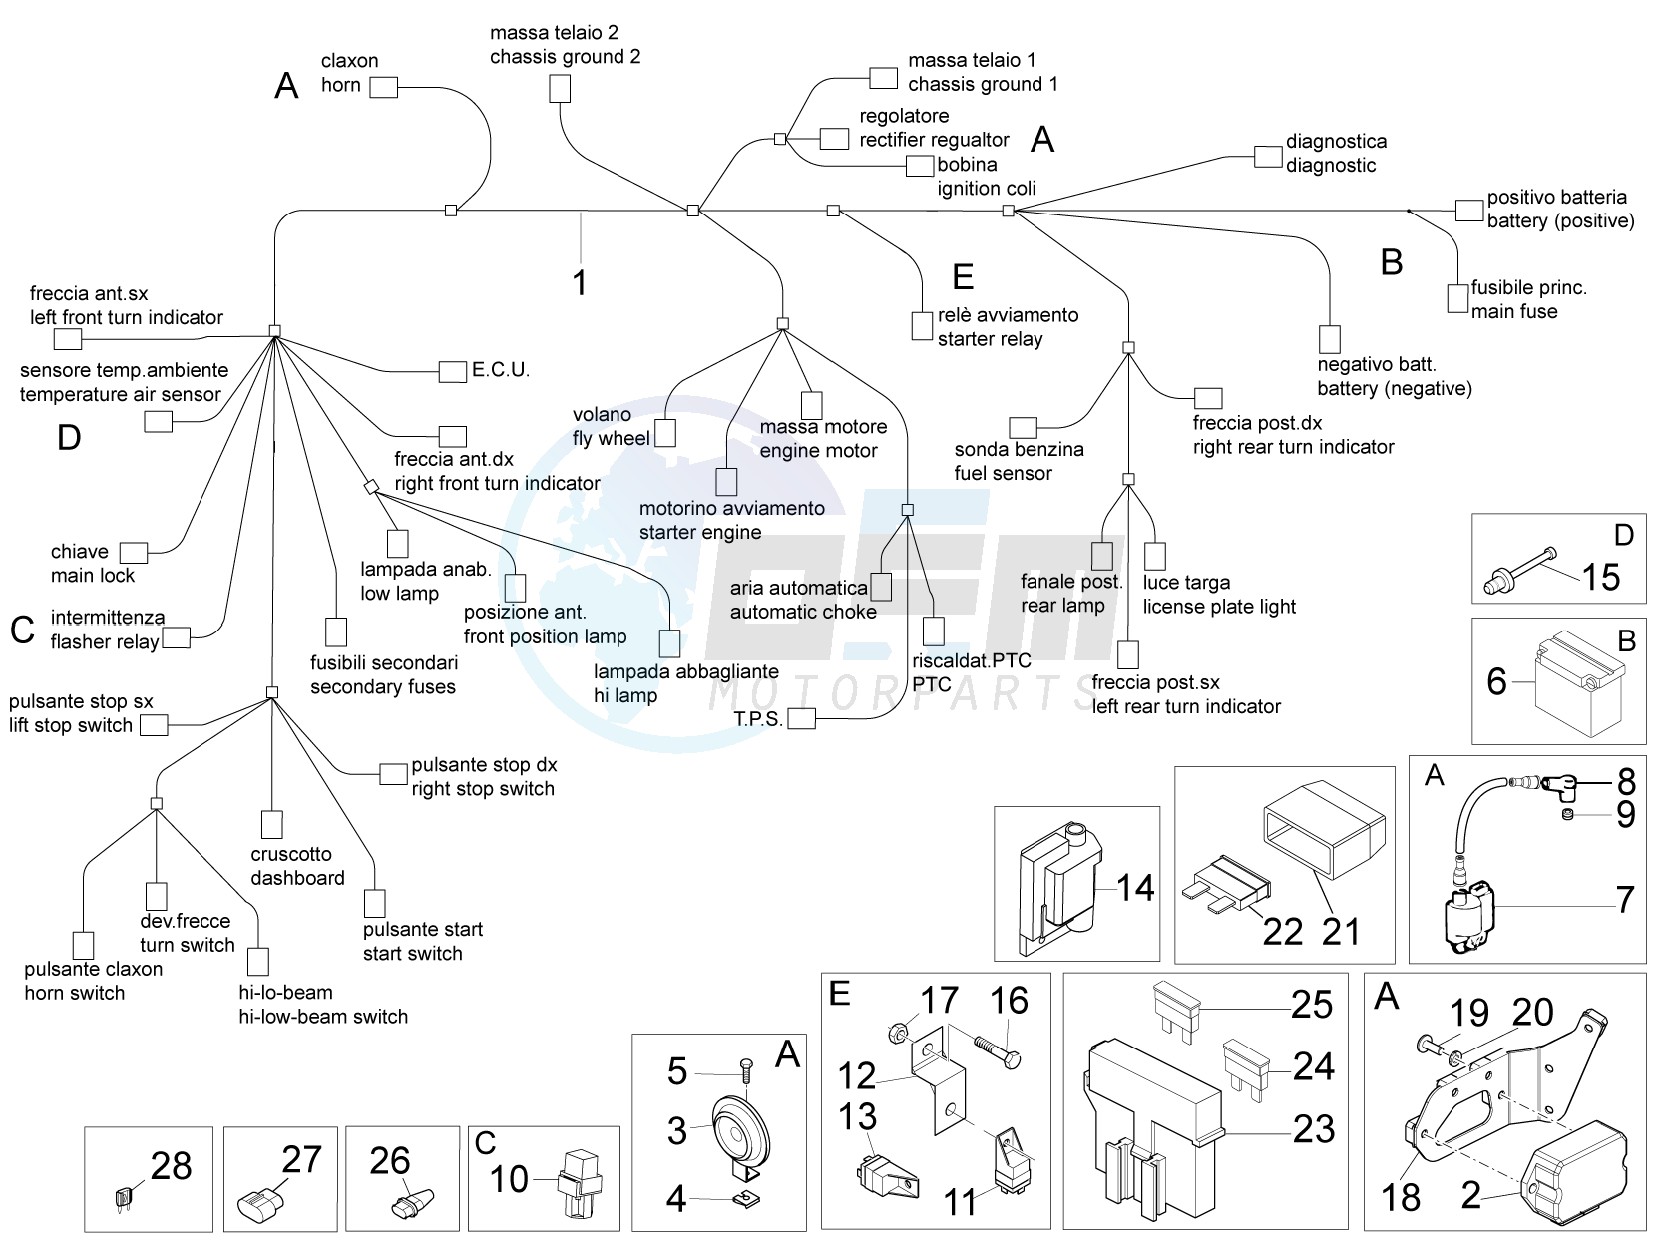 Electrical system blueprint